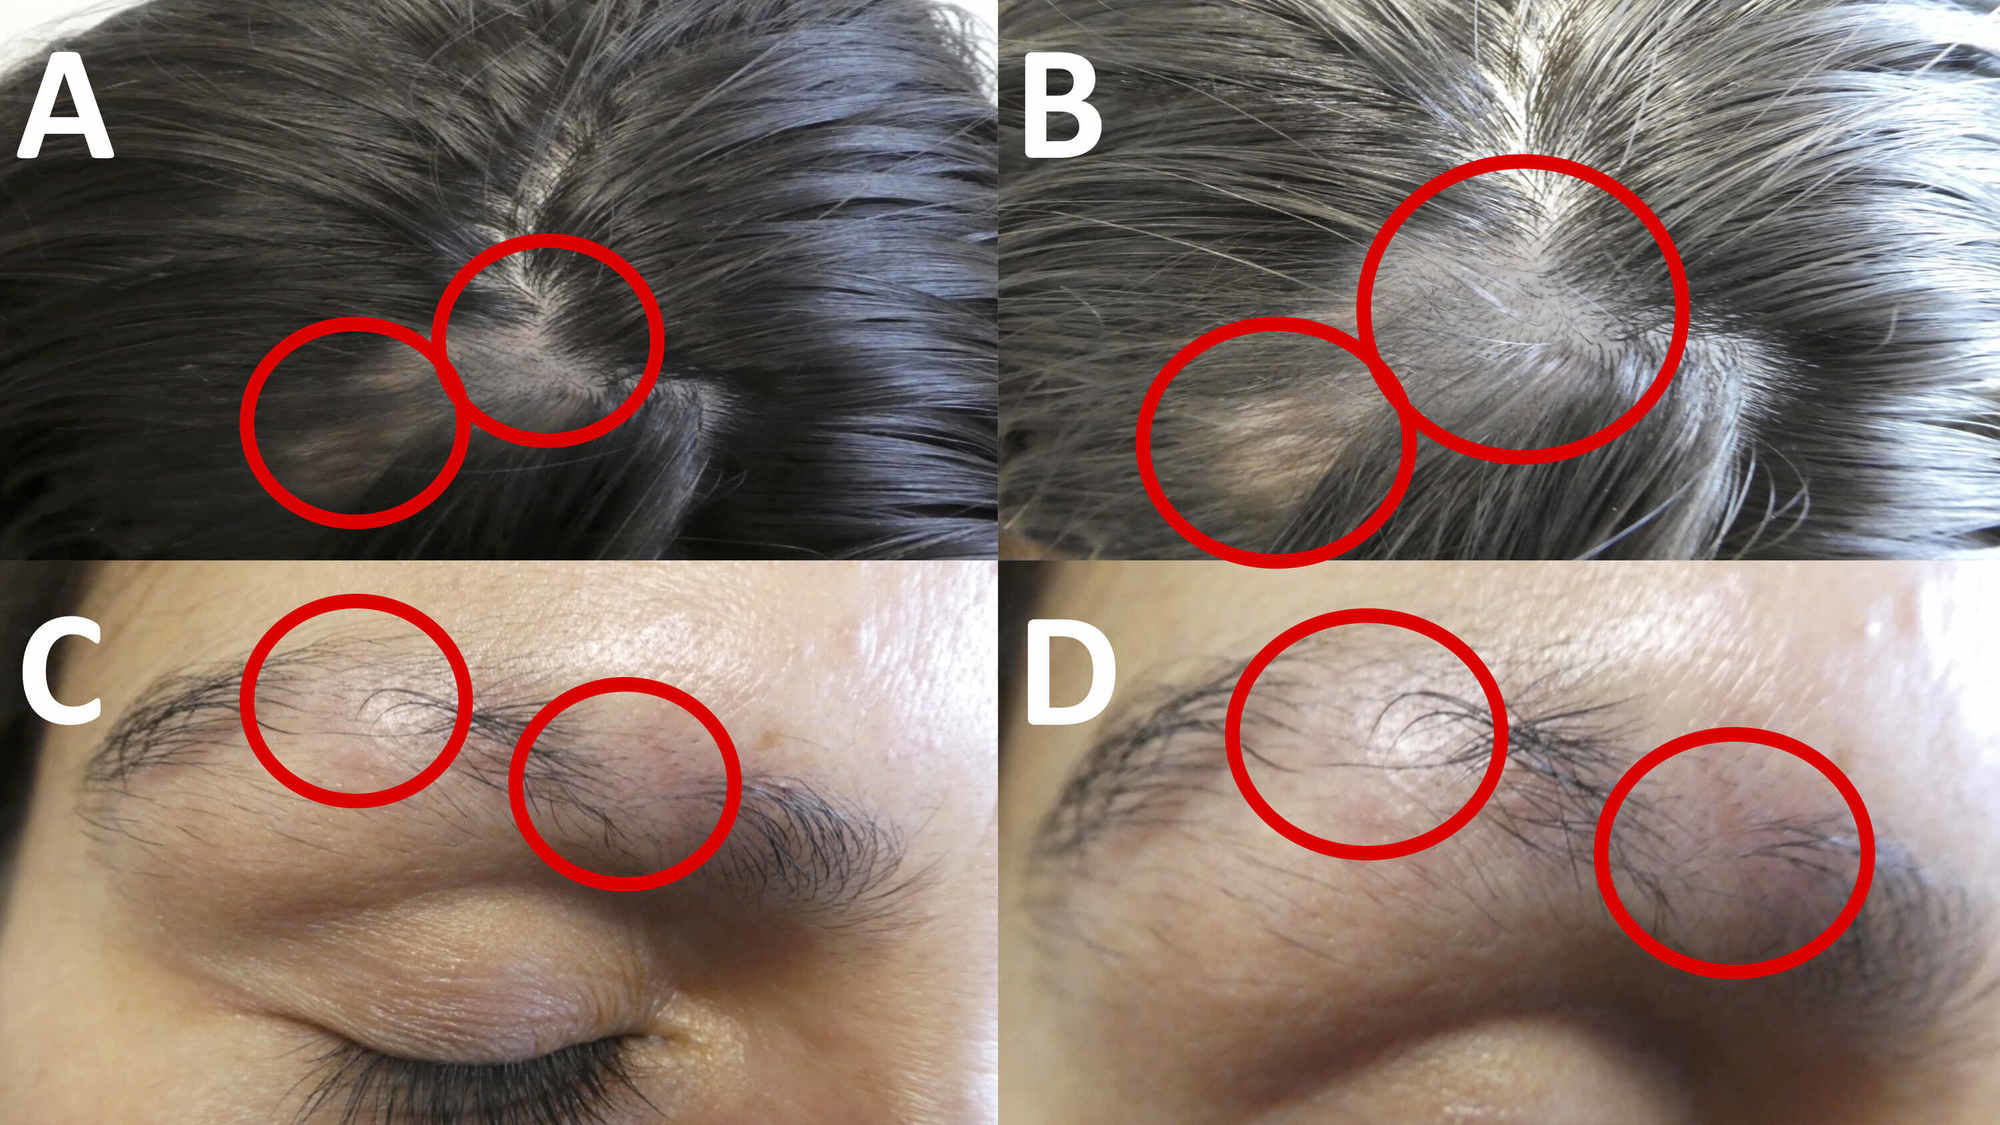 Cureus | Systemic Lupus Erythematosus Presenting as Alopecia Areata |  Article